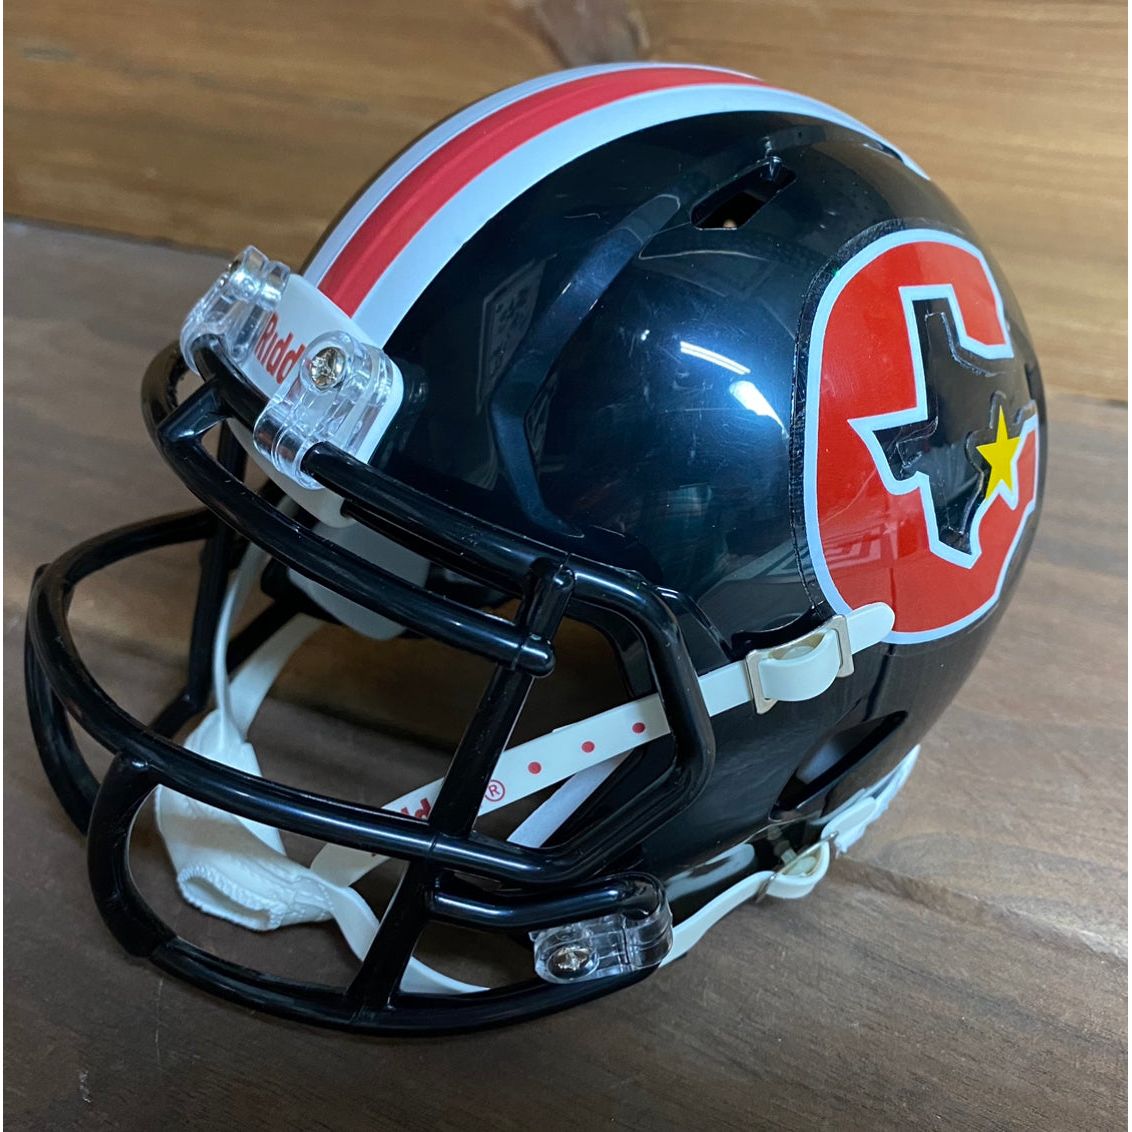 Houston Oilers vintage american football team helmet emblem Cap for Sale  by Qrea